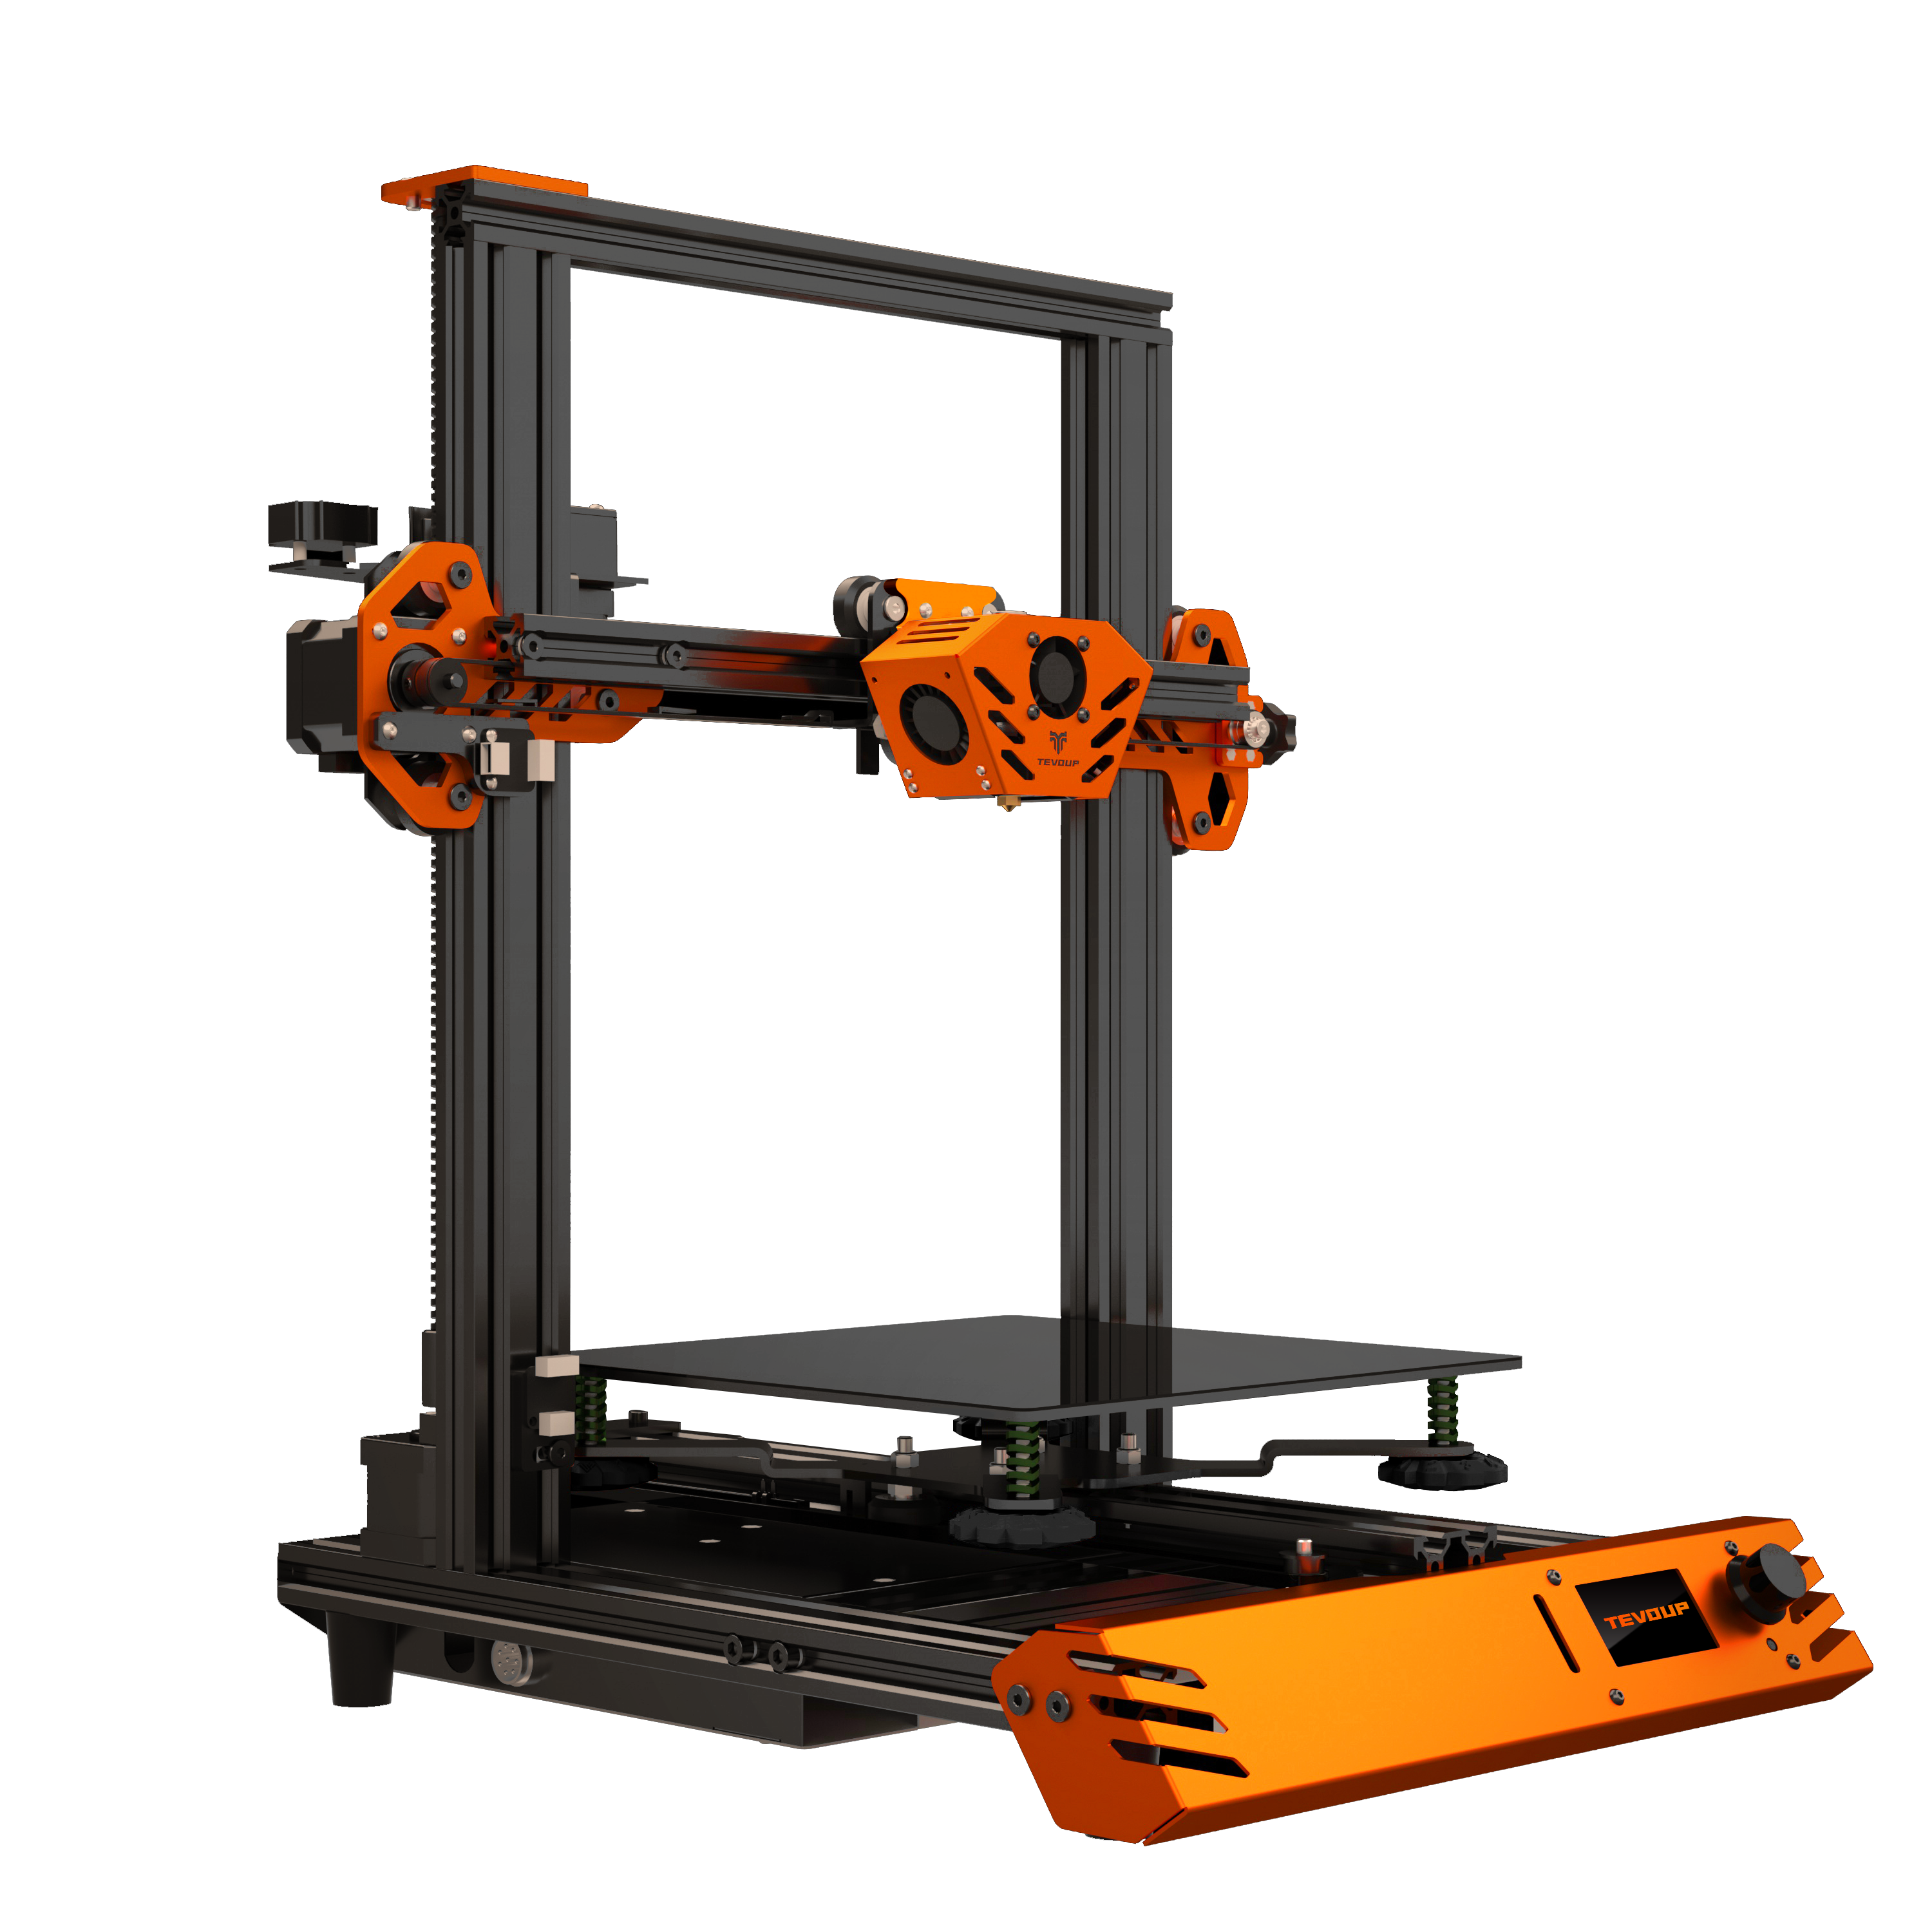 TEVOUP 3D Printer – MadeTheBest